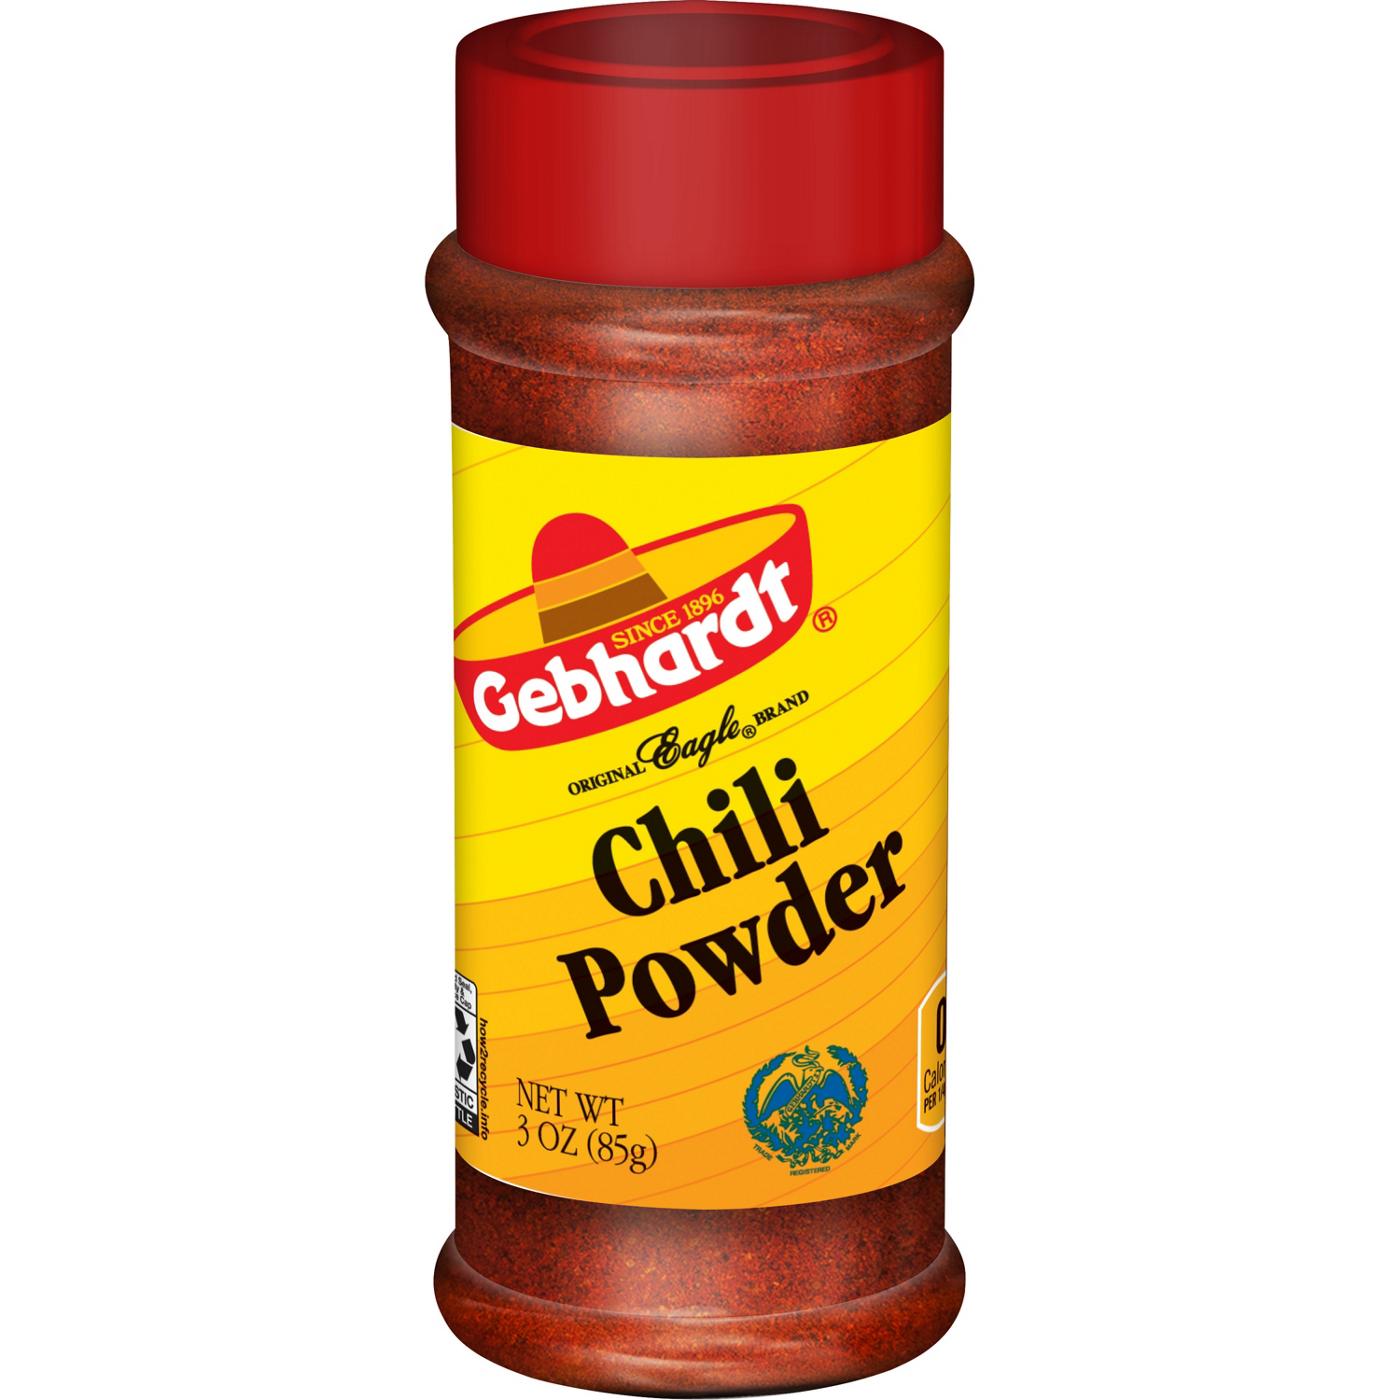 Gebhardt’s Chili Powder; image 1 of 3